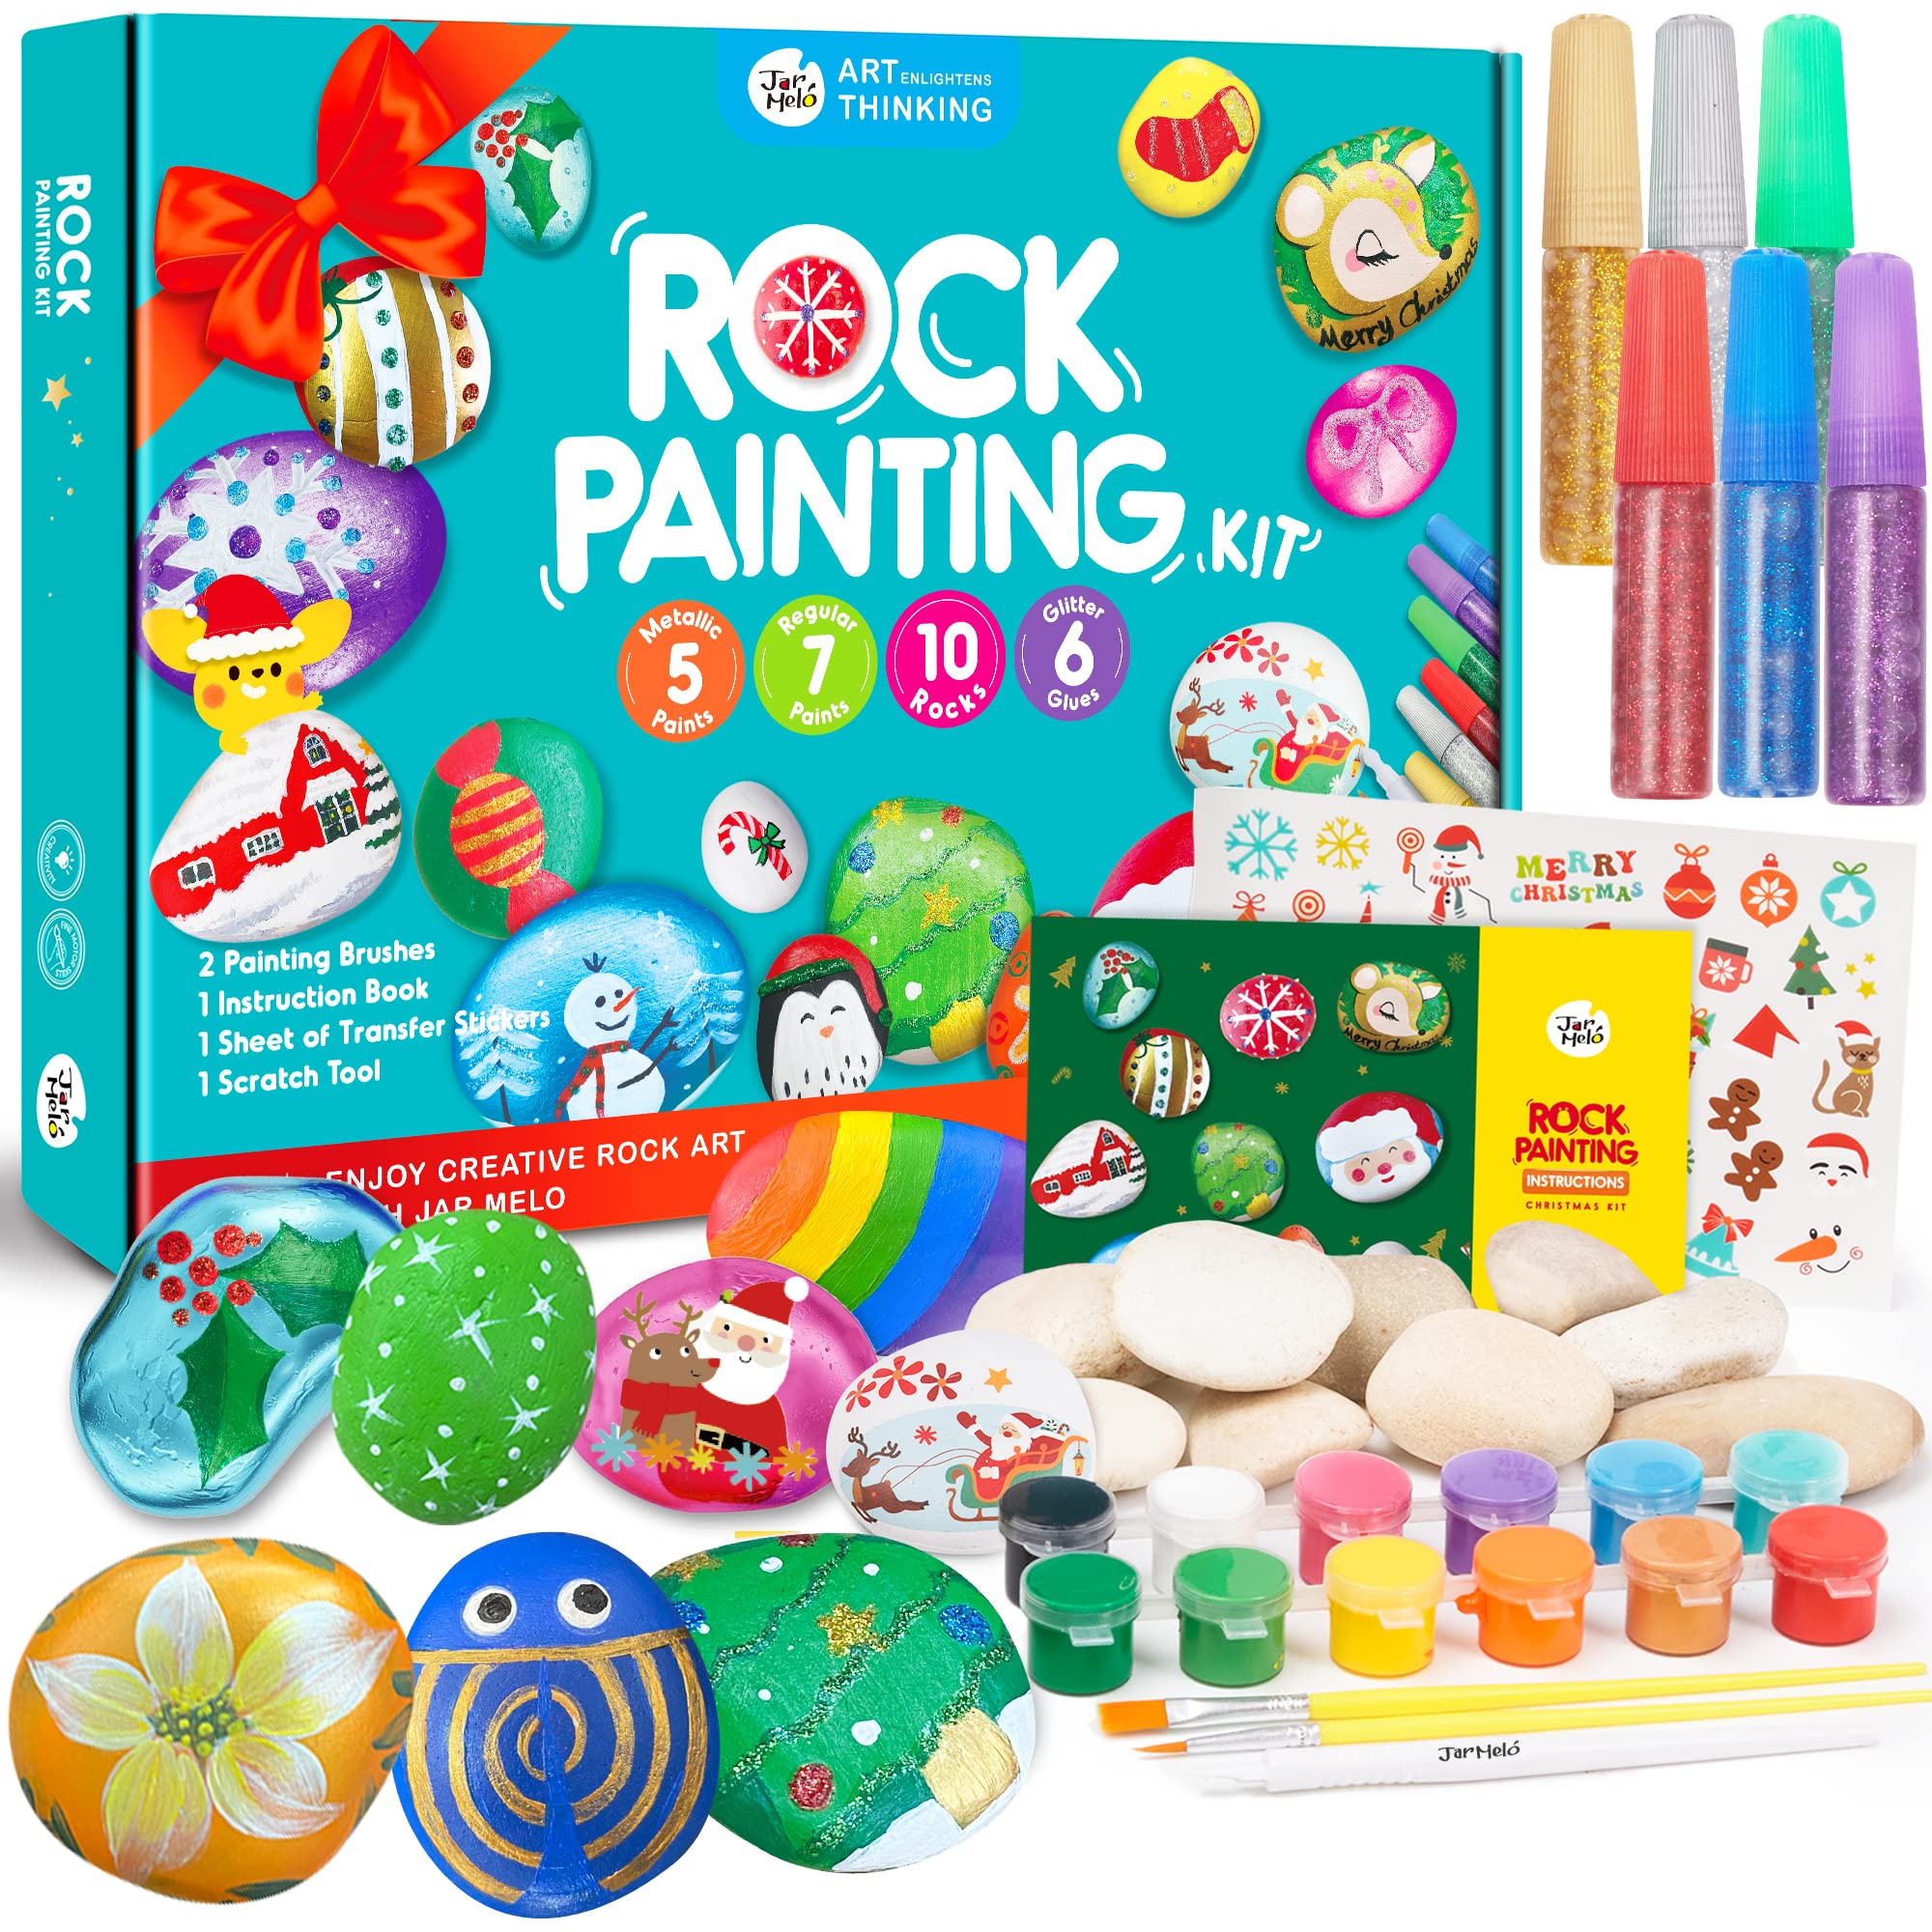 Jar Melo Rock Painting Kit,Hide & Seek Rock Kits for Girls & Boys Ages 6-12, Art Supplies for Painting Rocks,Best Gift Art Set, Waterproof Paints